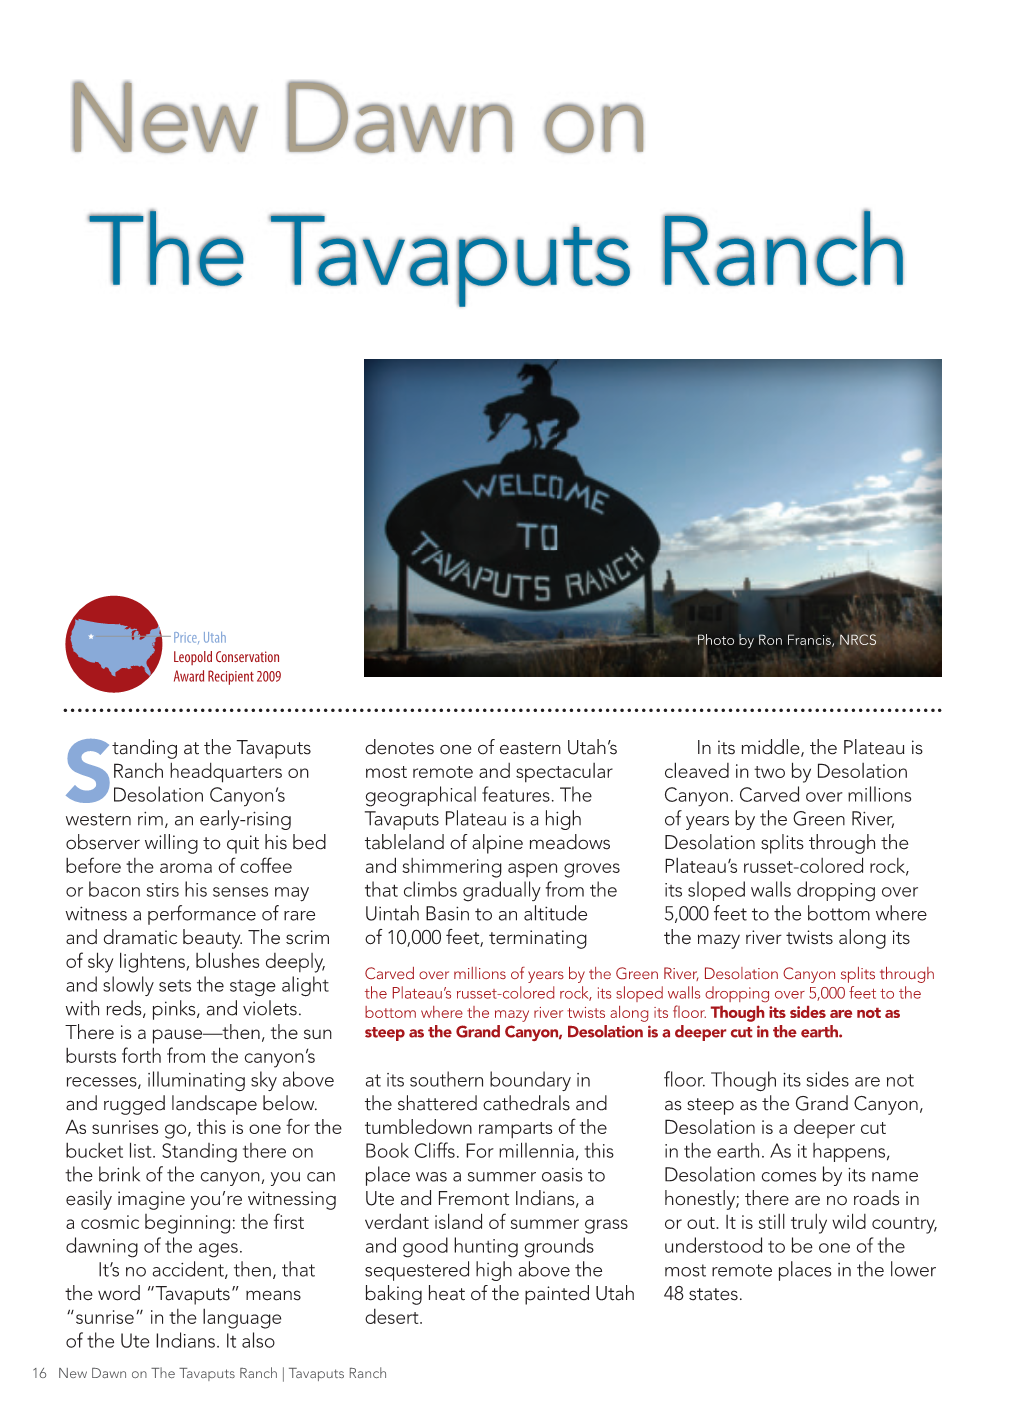 New Dawn on the Tavaputs Ranch